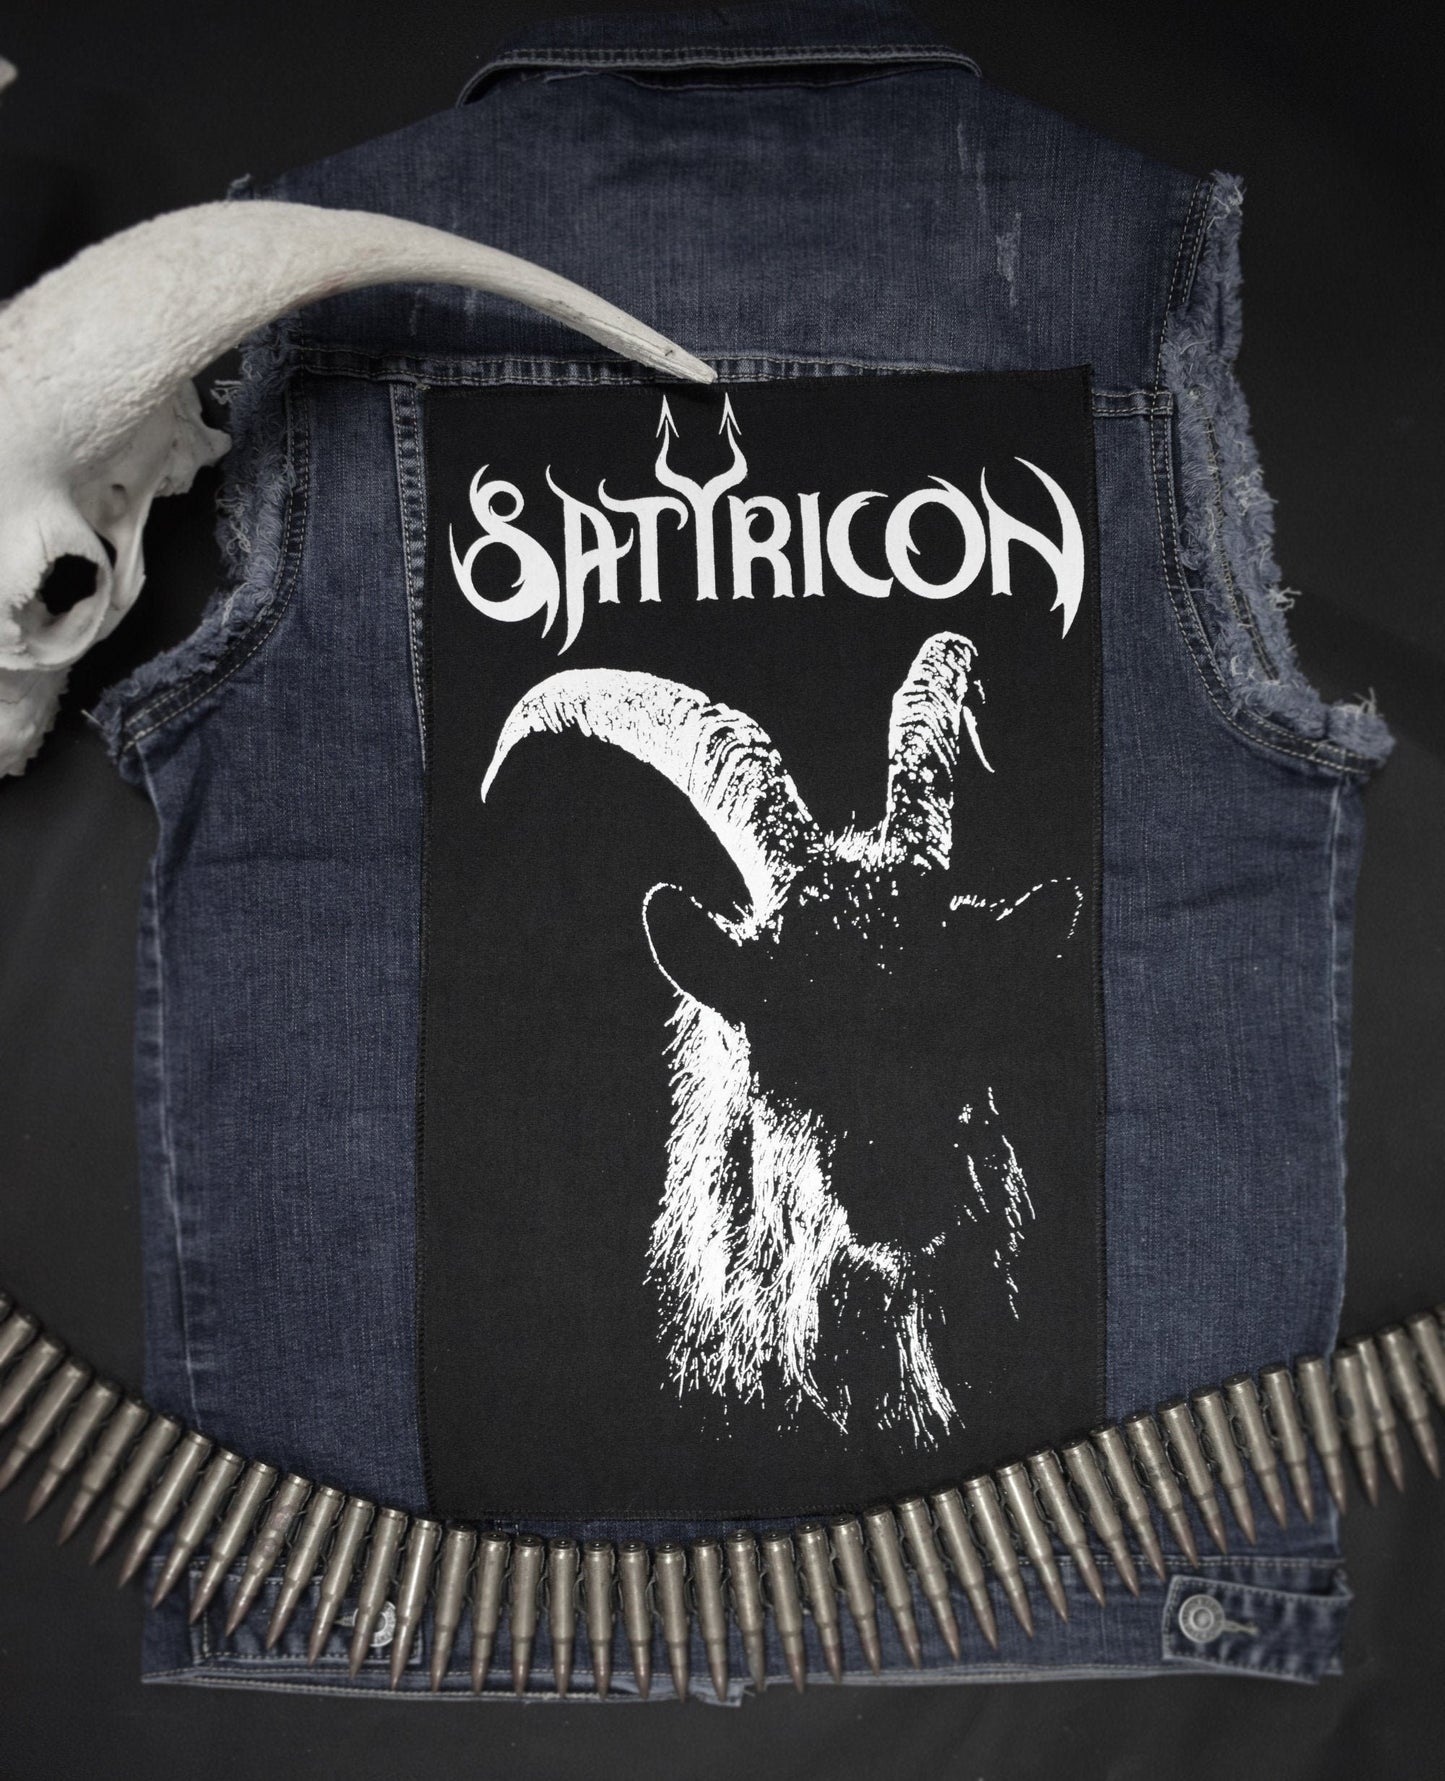 Satyricon Satyr big Back patch ⇹ black metal ⇹ Satyricon goat black metal patch ⇹ Satyricon Jacket vest patch